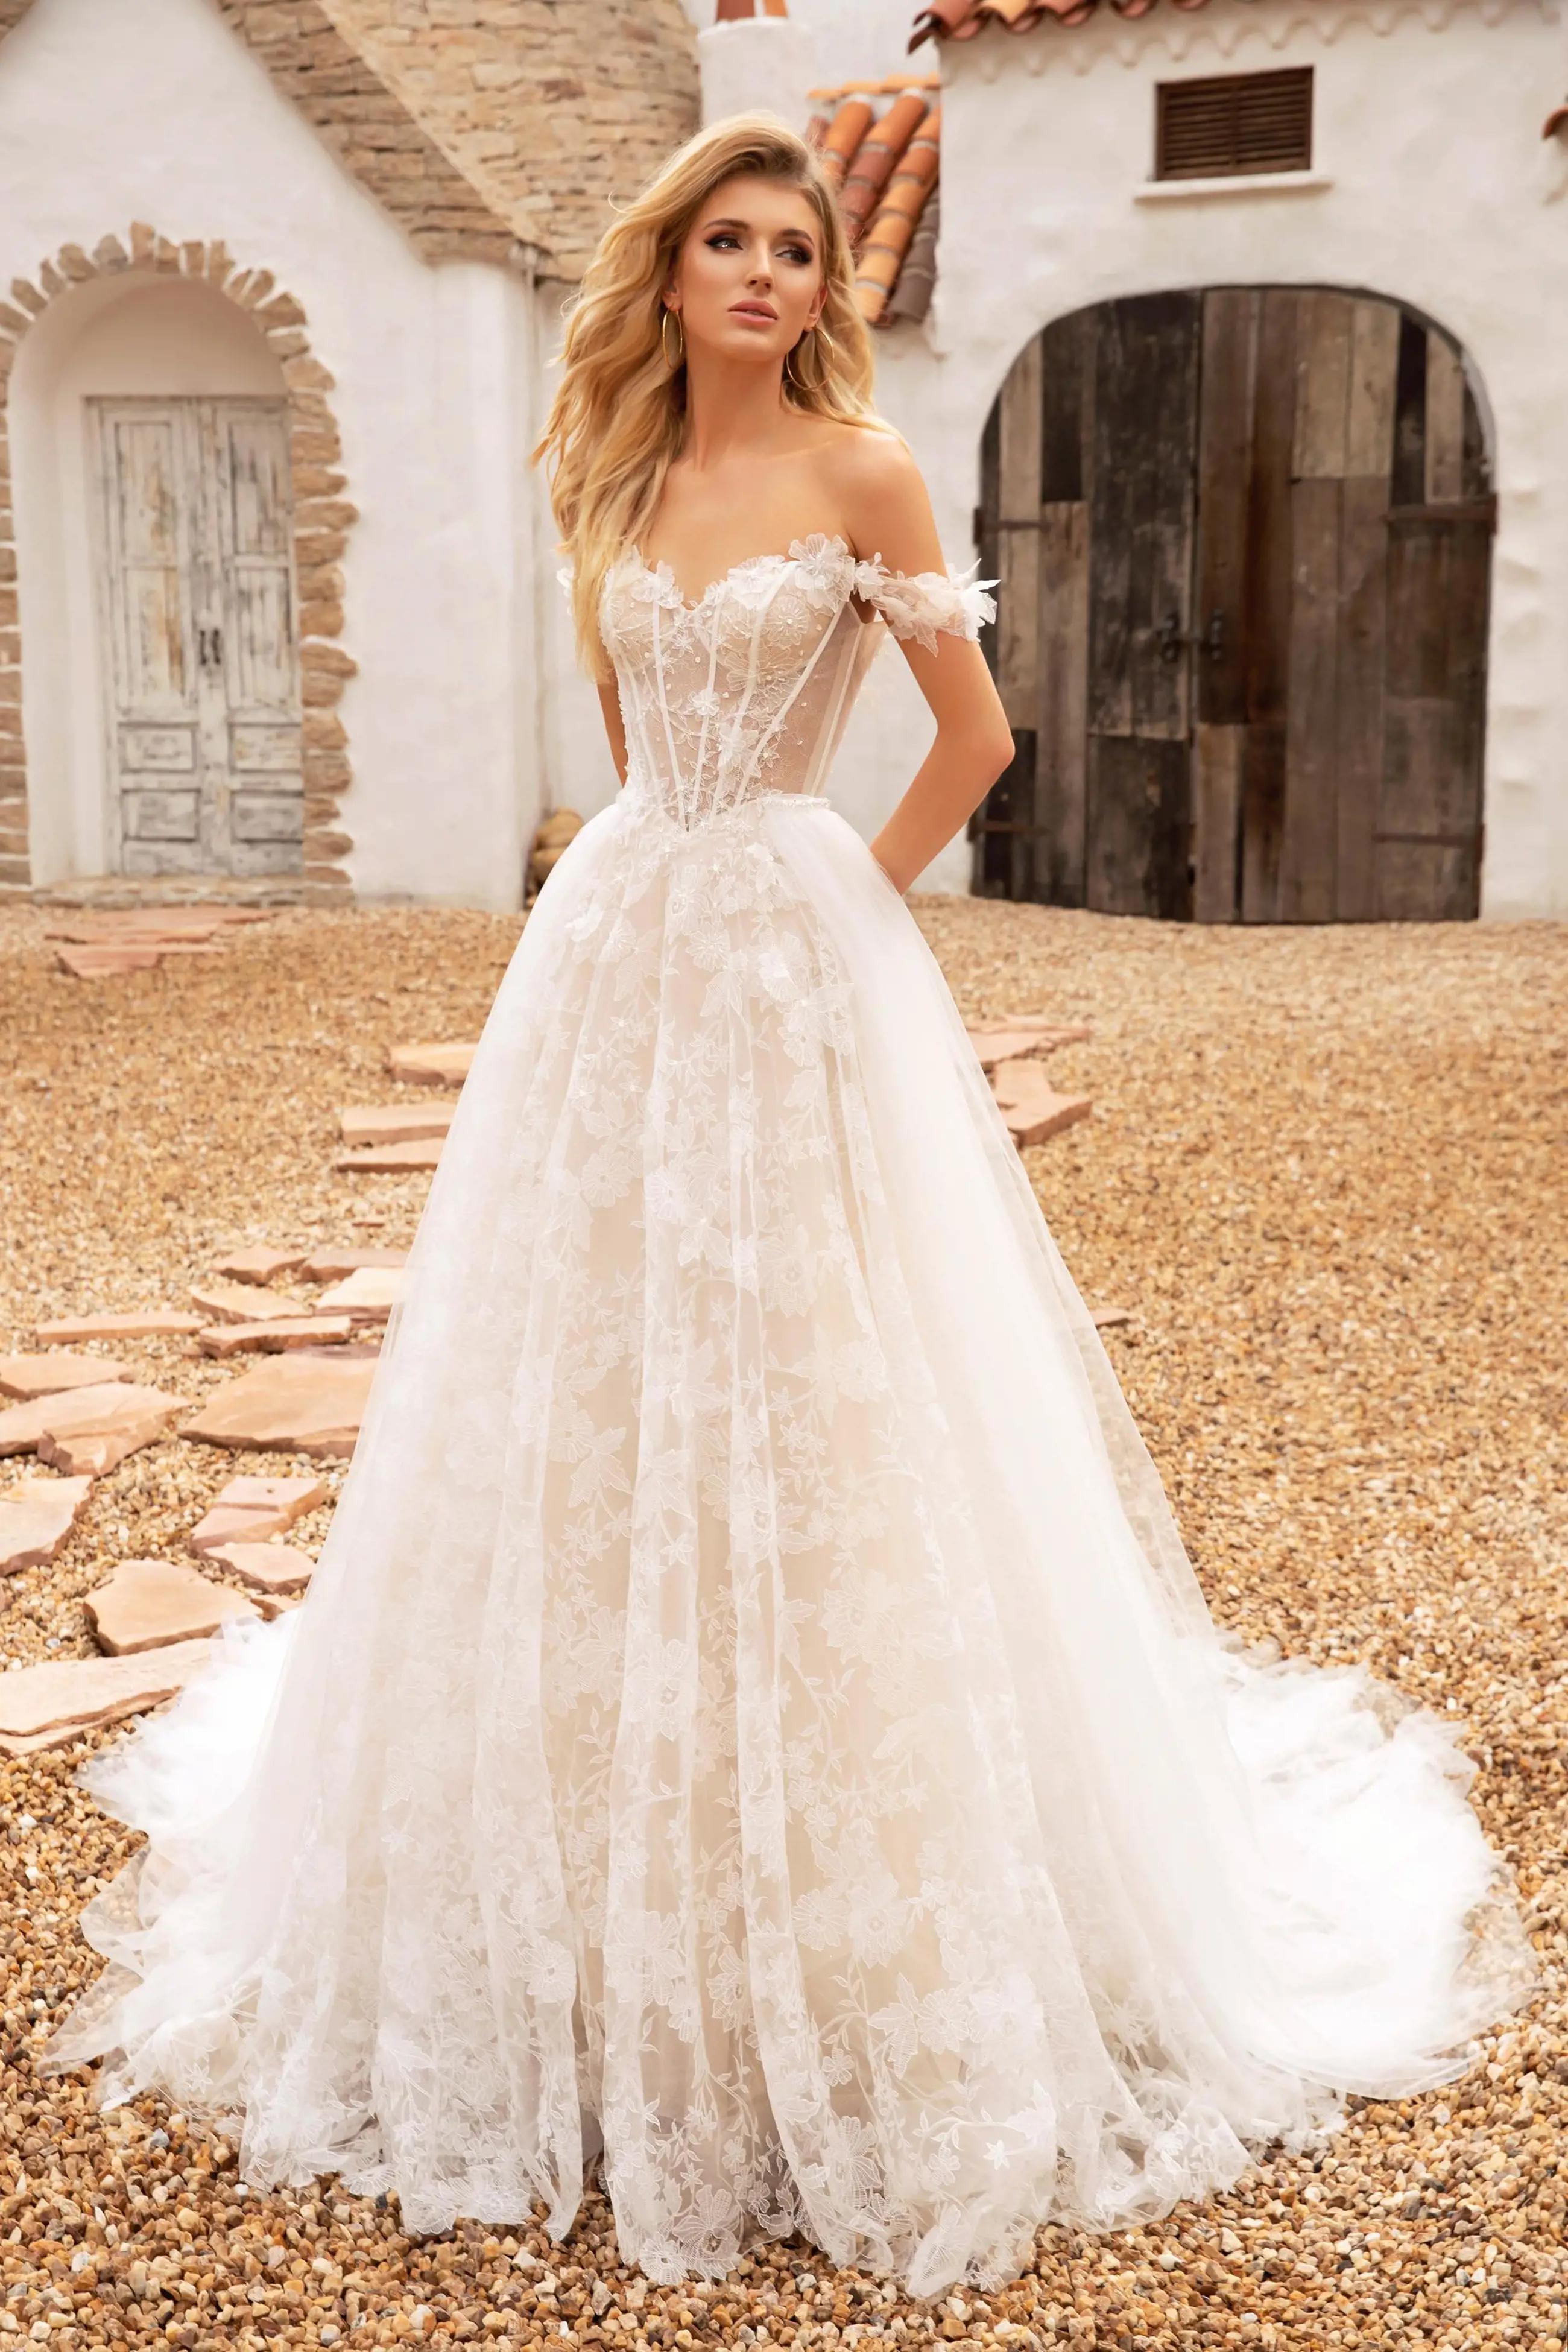 Wedding Dresses That Will Make You Feel Like a Princess Image